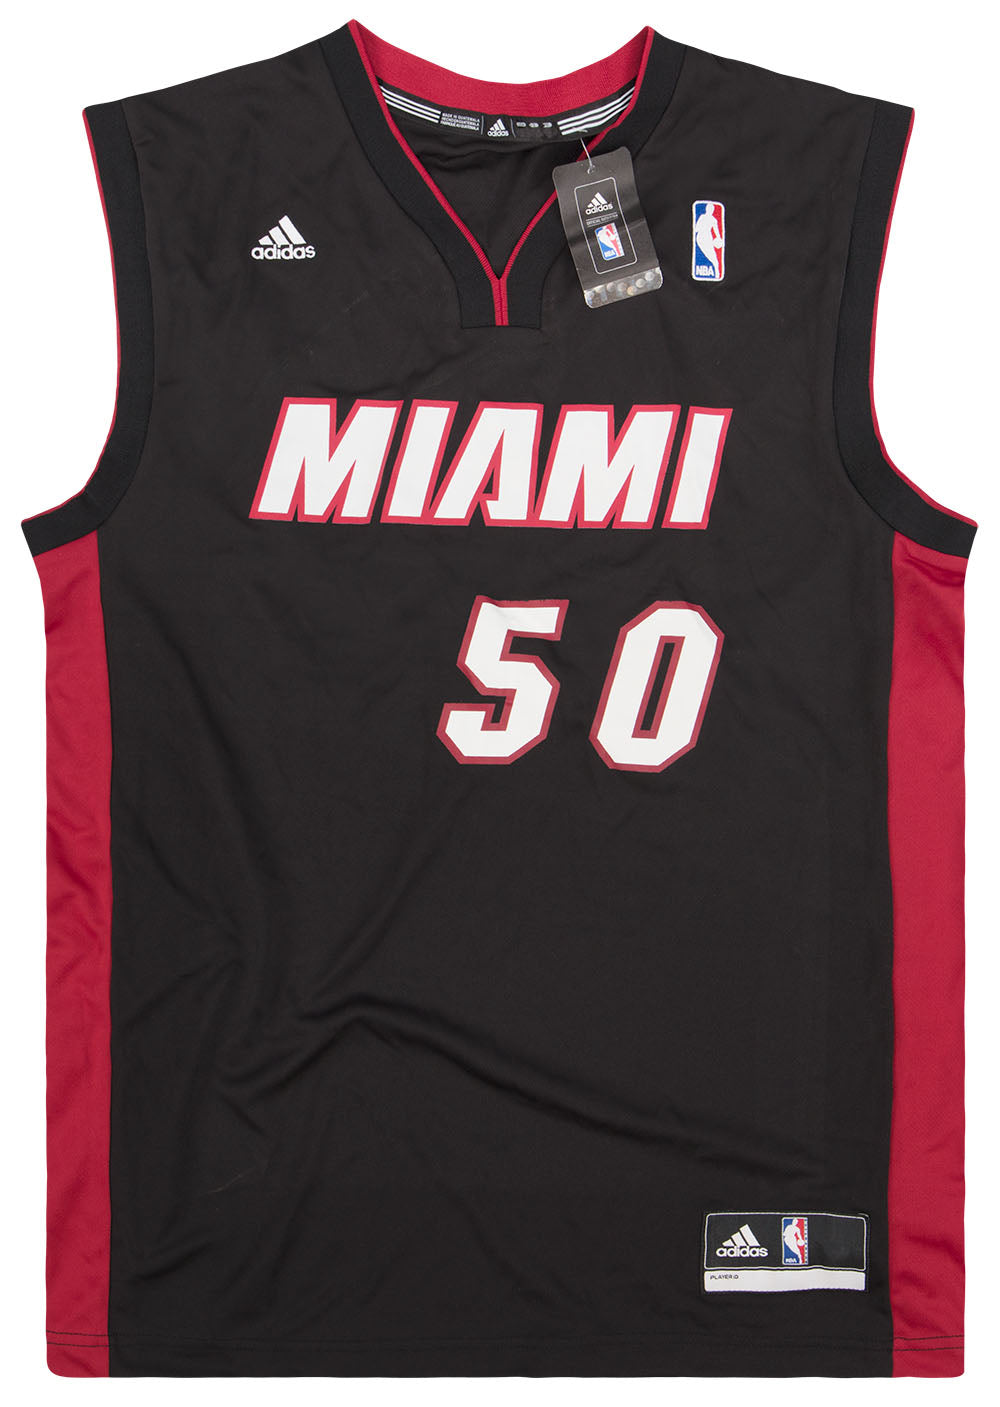 Miami Heat Lebron James 2012 Champions Adidas Basketball Jersey